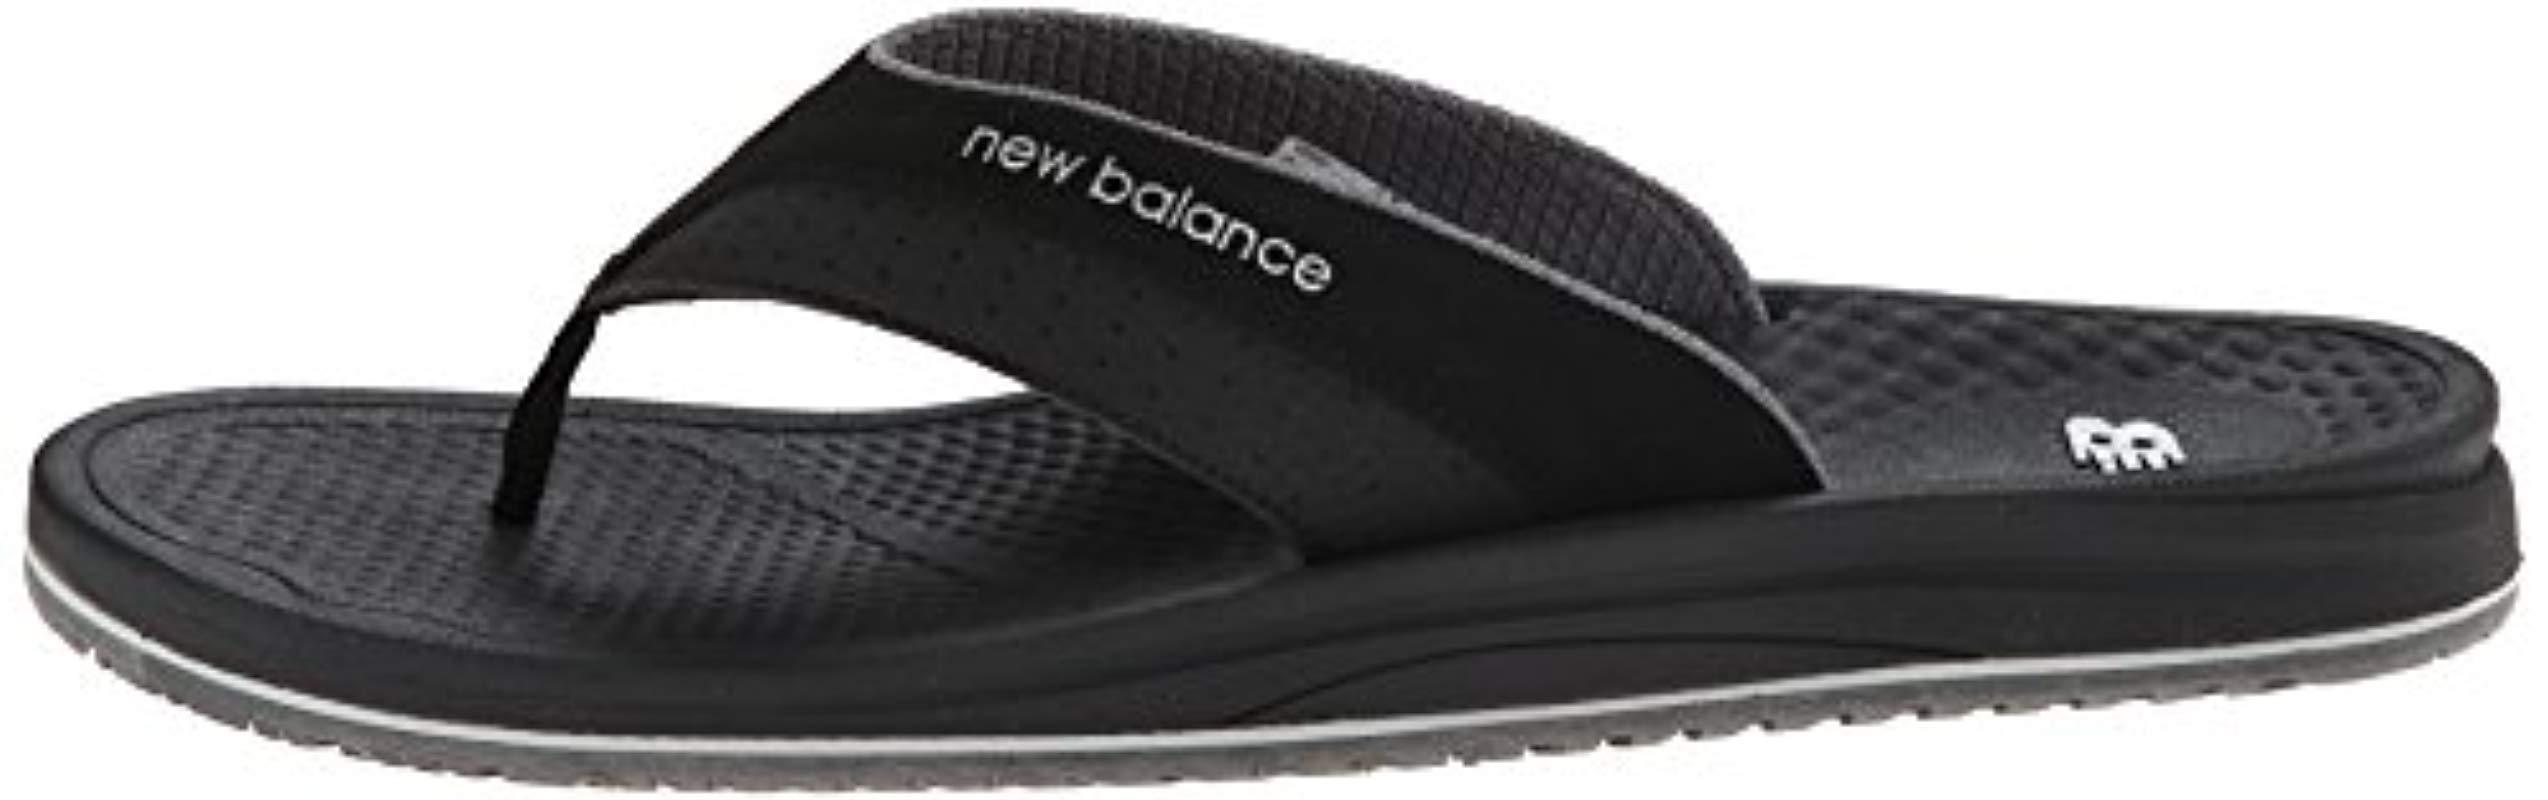 new balance purealign flip flop